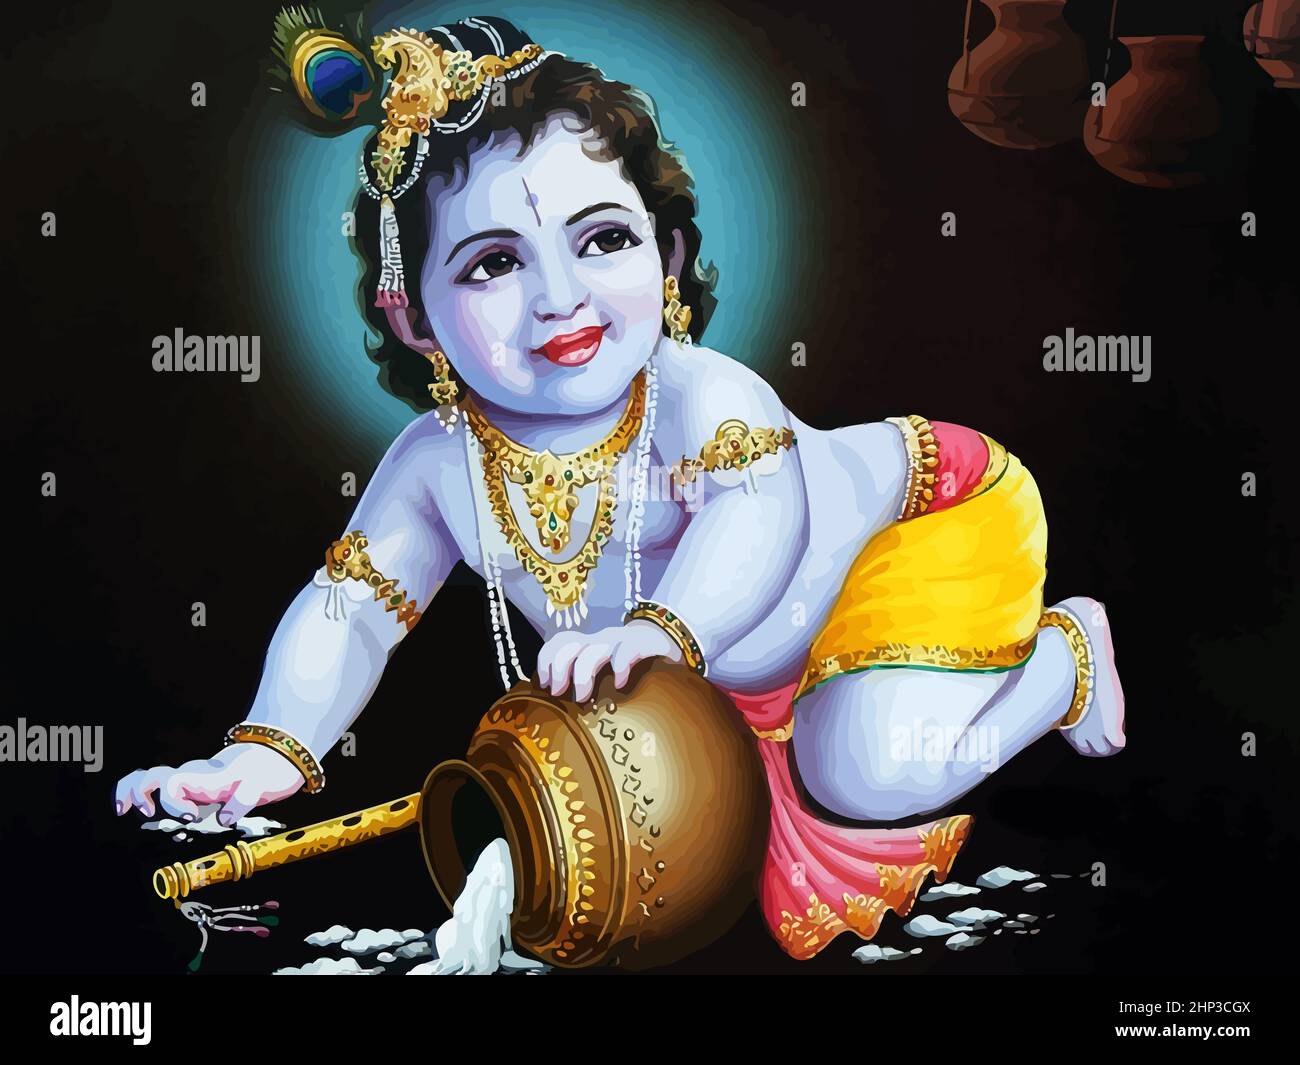 shri gopal krishna hinduism culture mythology illustration Stock ...